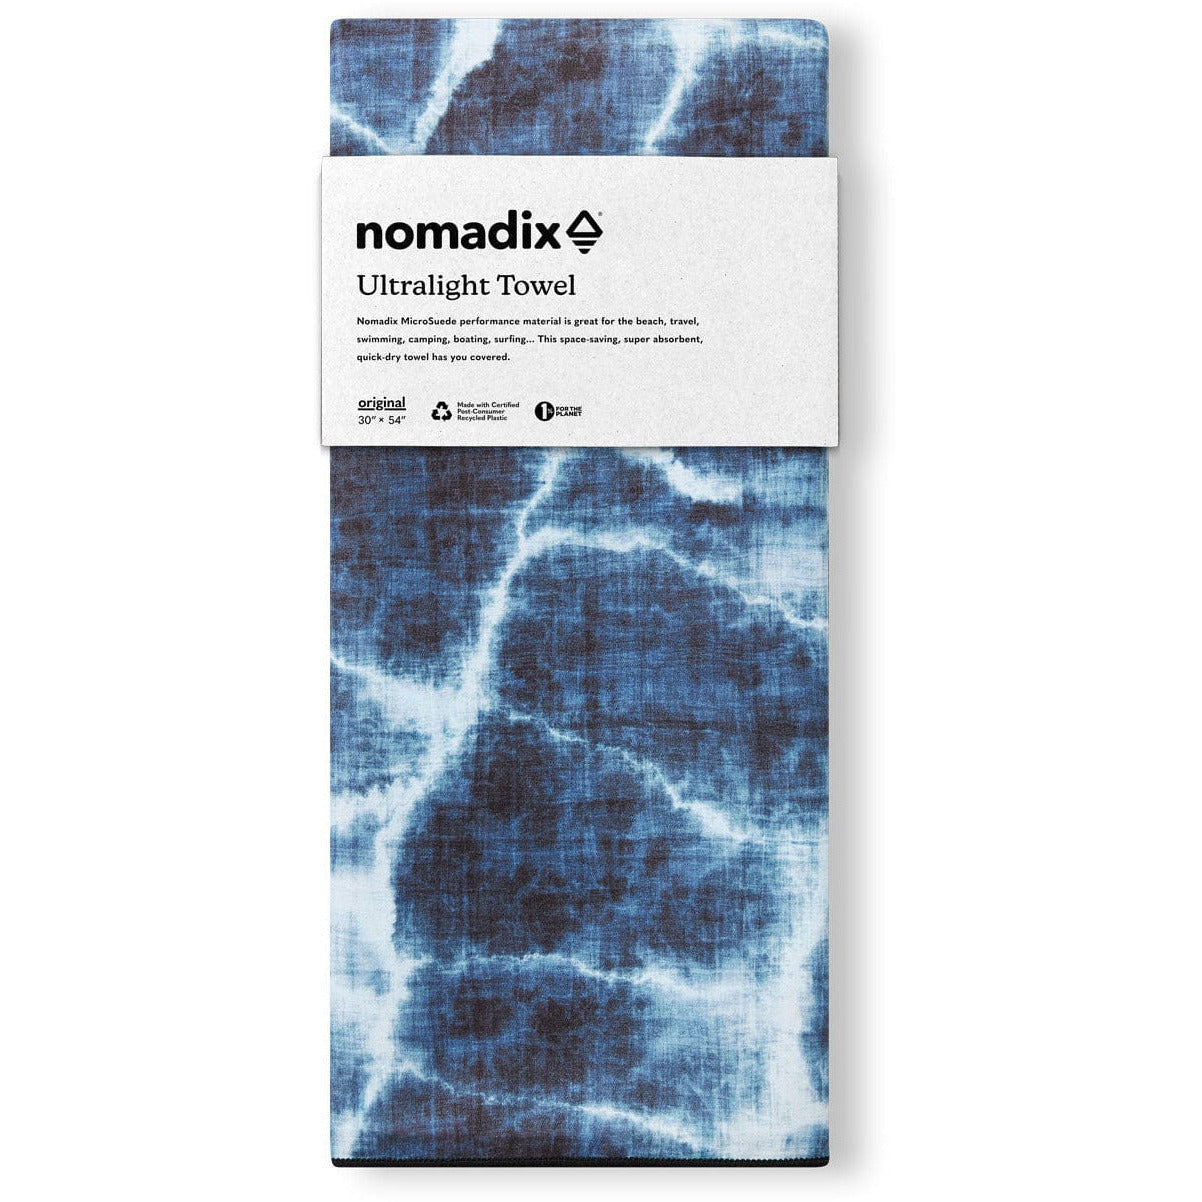 Nomadix Ultralight Towel  - 